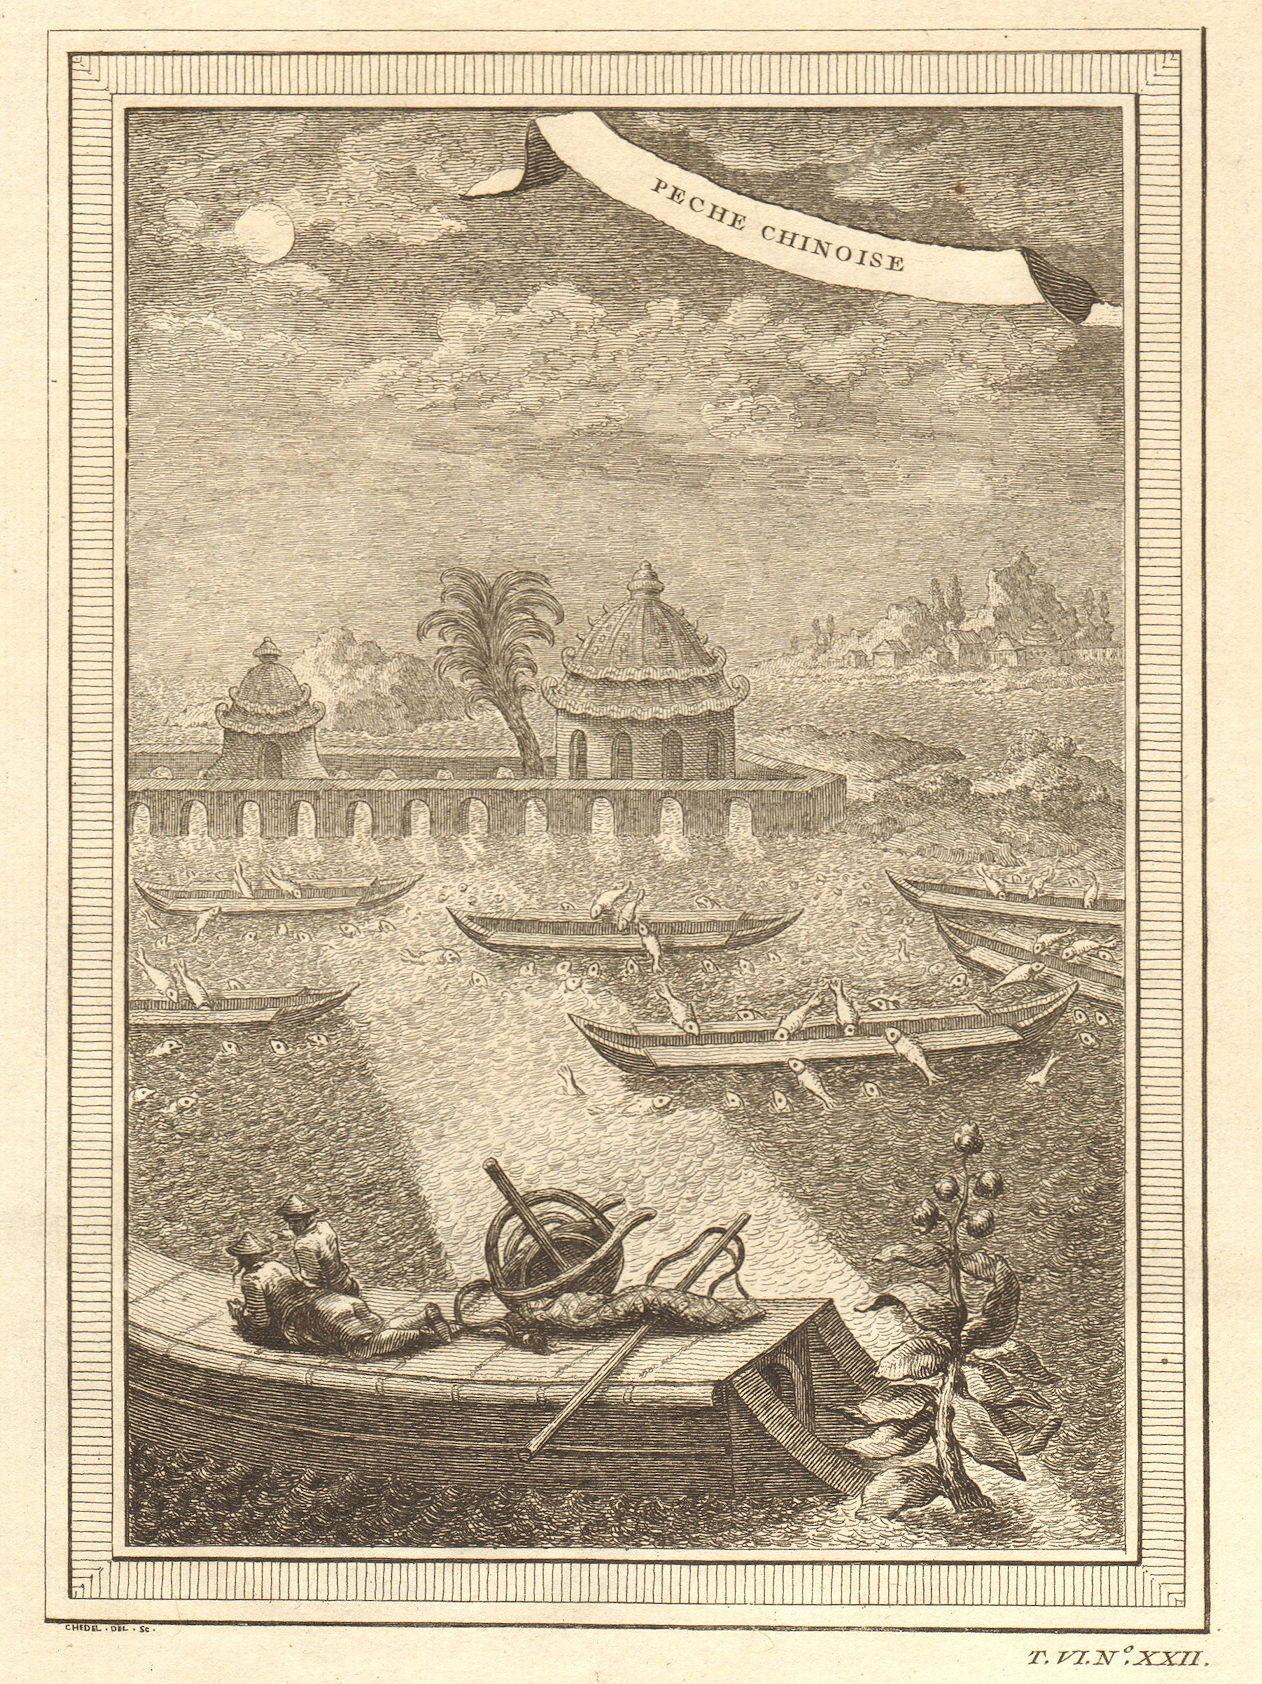 Peche Chinoise. China. Chinese fishing method jumping into varnished boats 1748